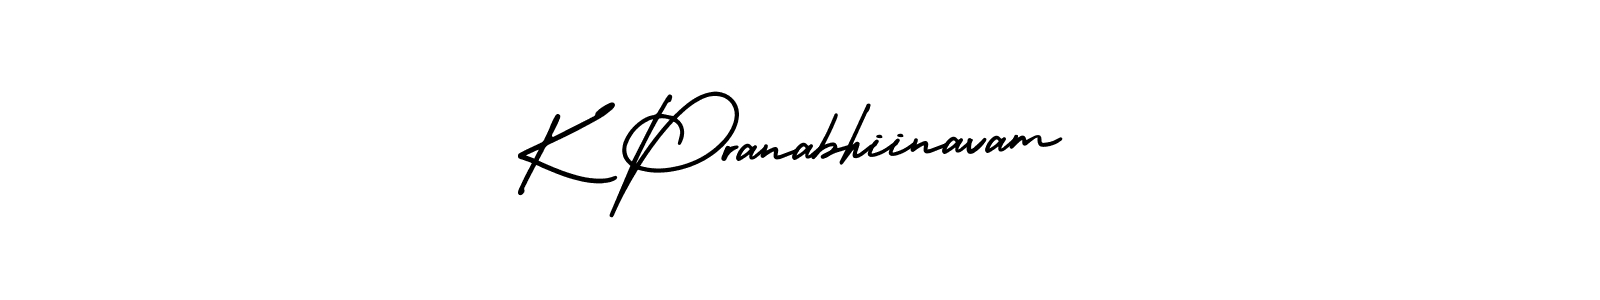 Use a signature maker to create a handwritten signature online. With this signature software, you can design (AmerikaSignatureDemo-Regular) your own signature for name K Pranabhiinavam. K Pranabhiinavam signature style 3 images and pictures png